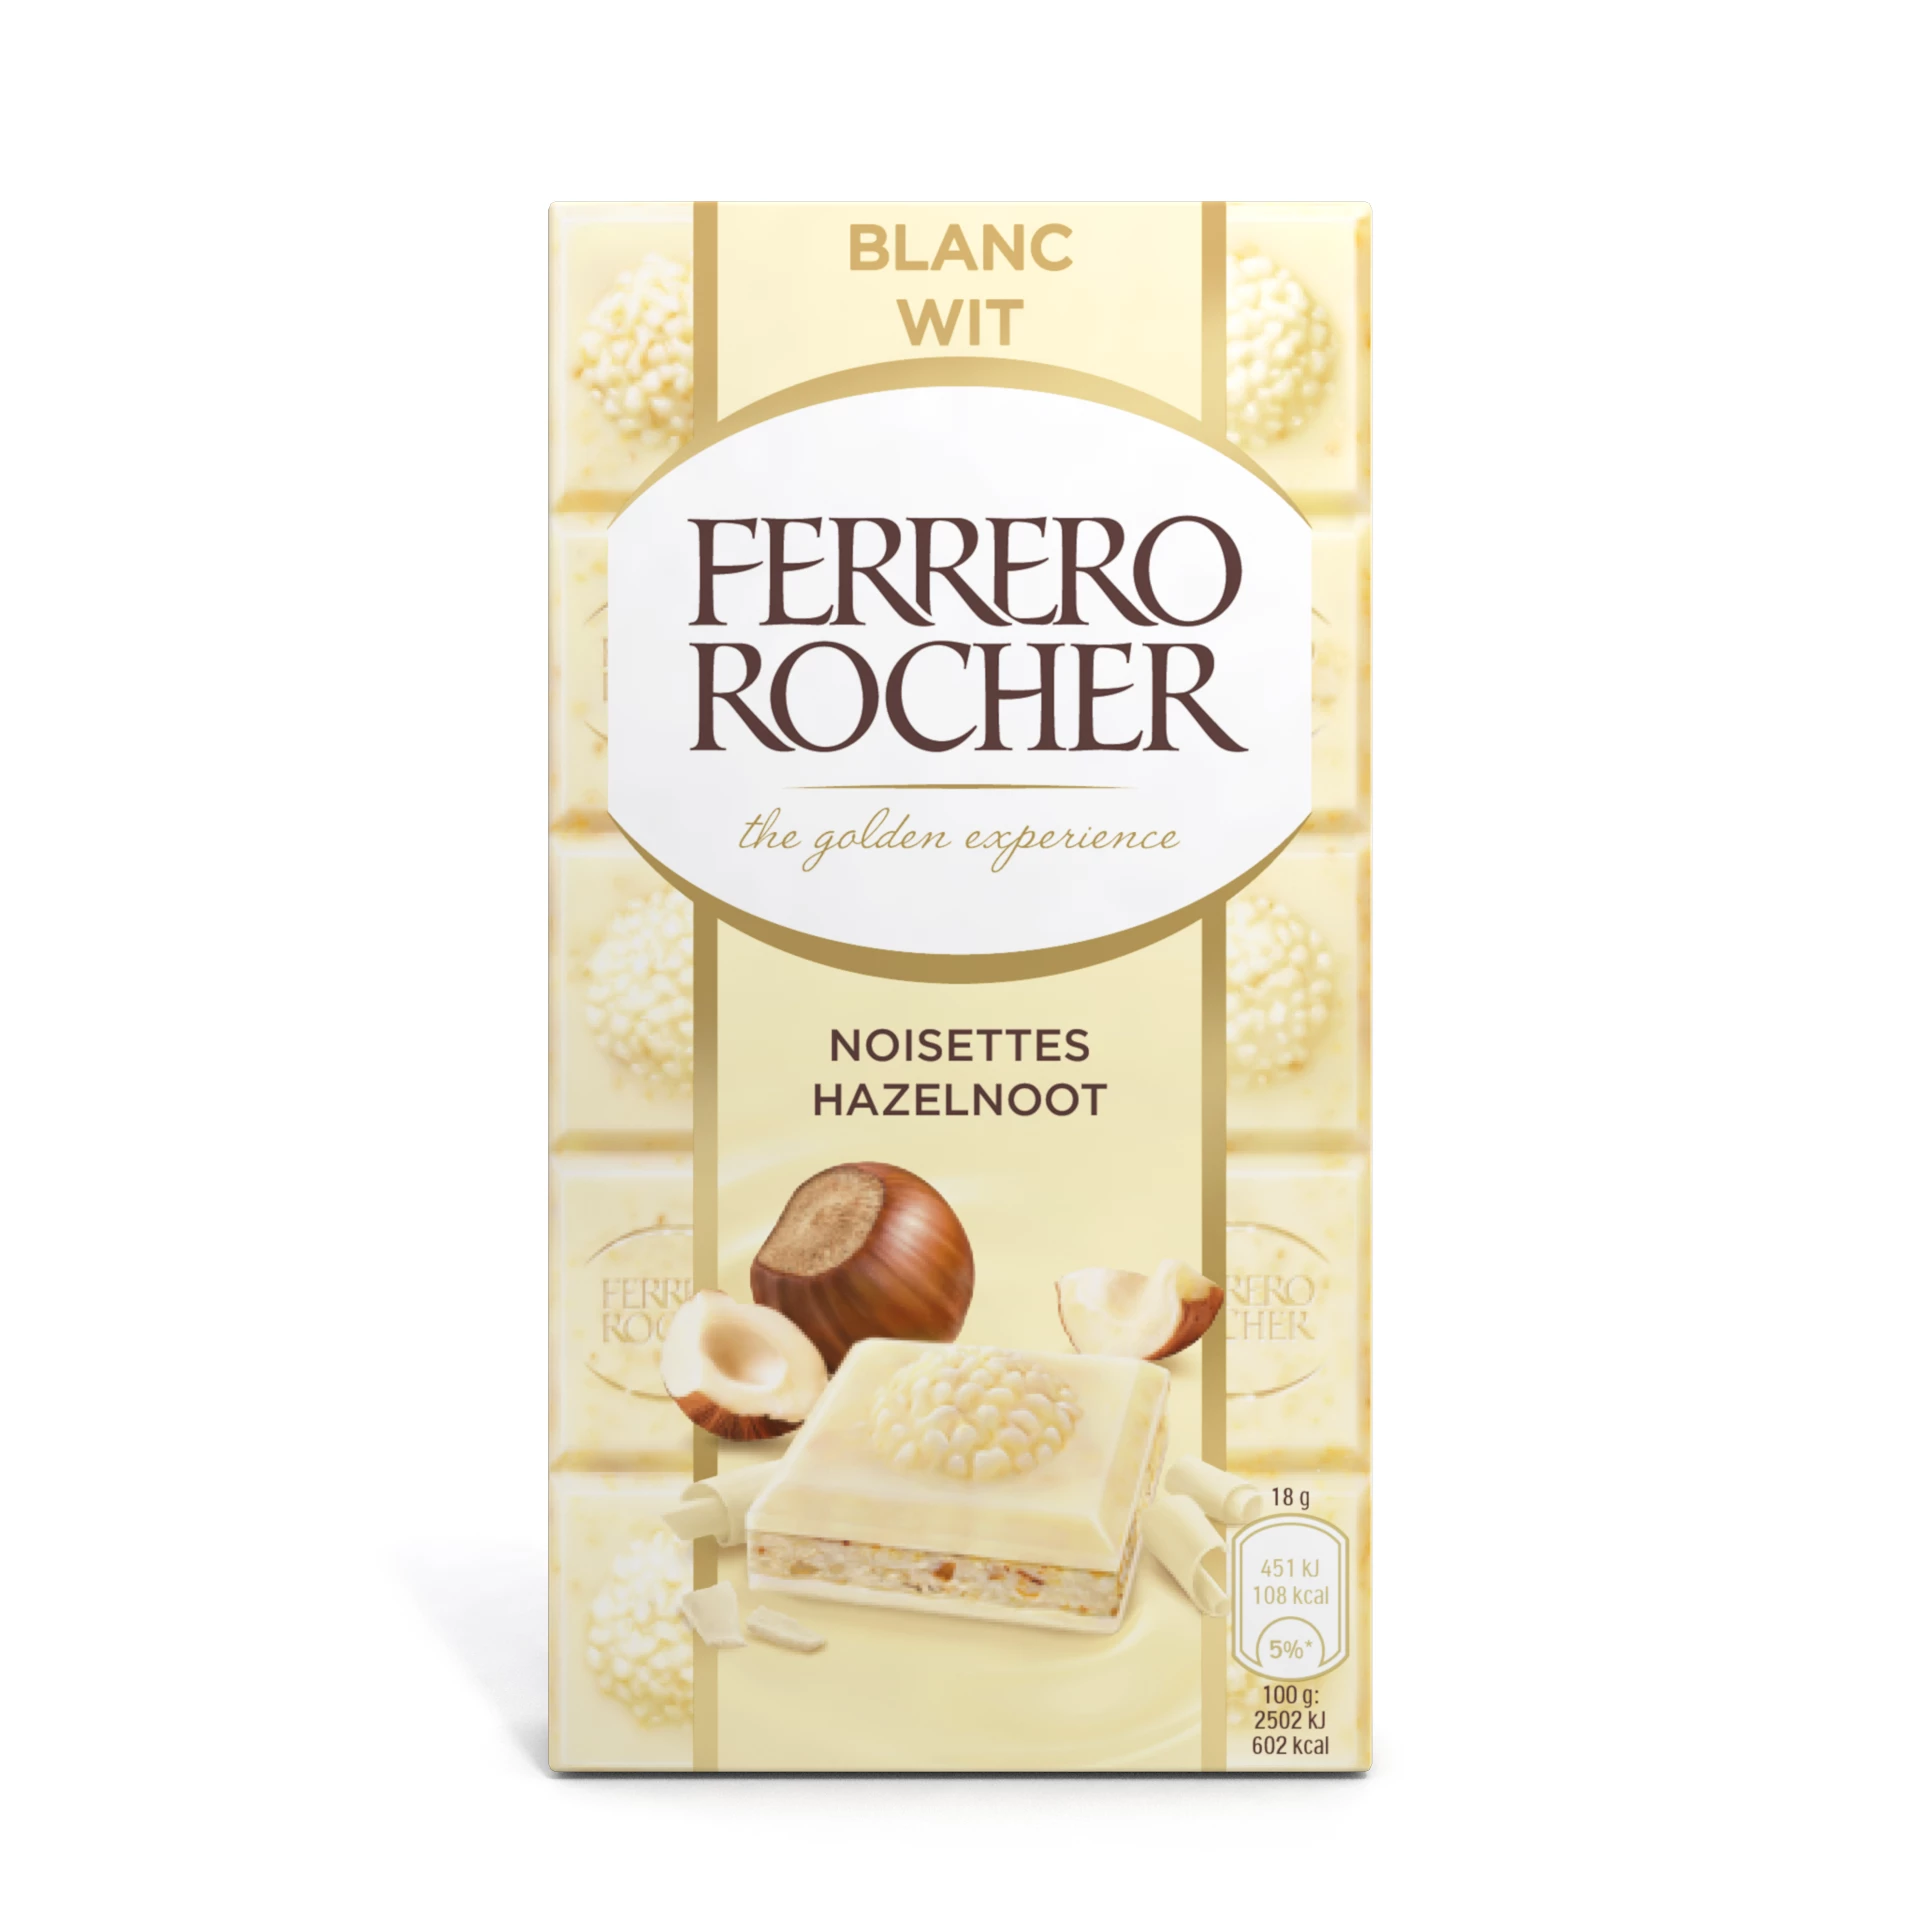 Hạt phỉ trắng Ferrero Rocher, 90g - FERRERO